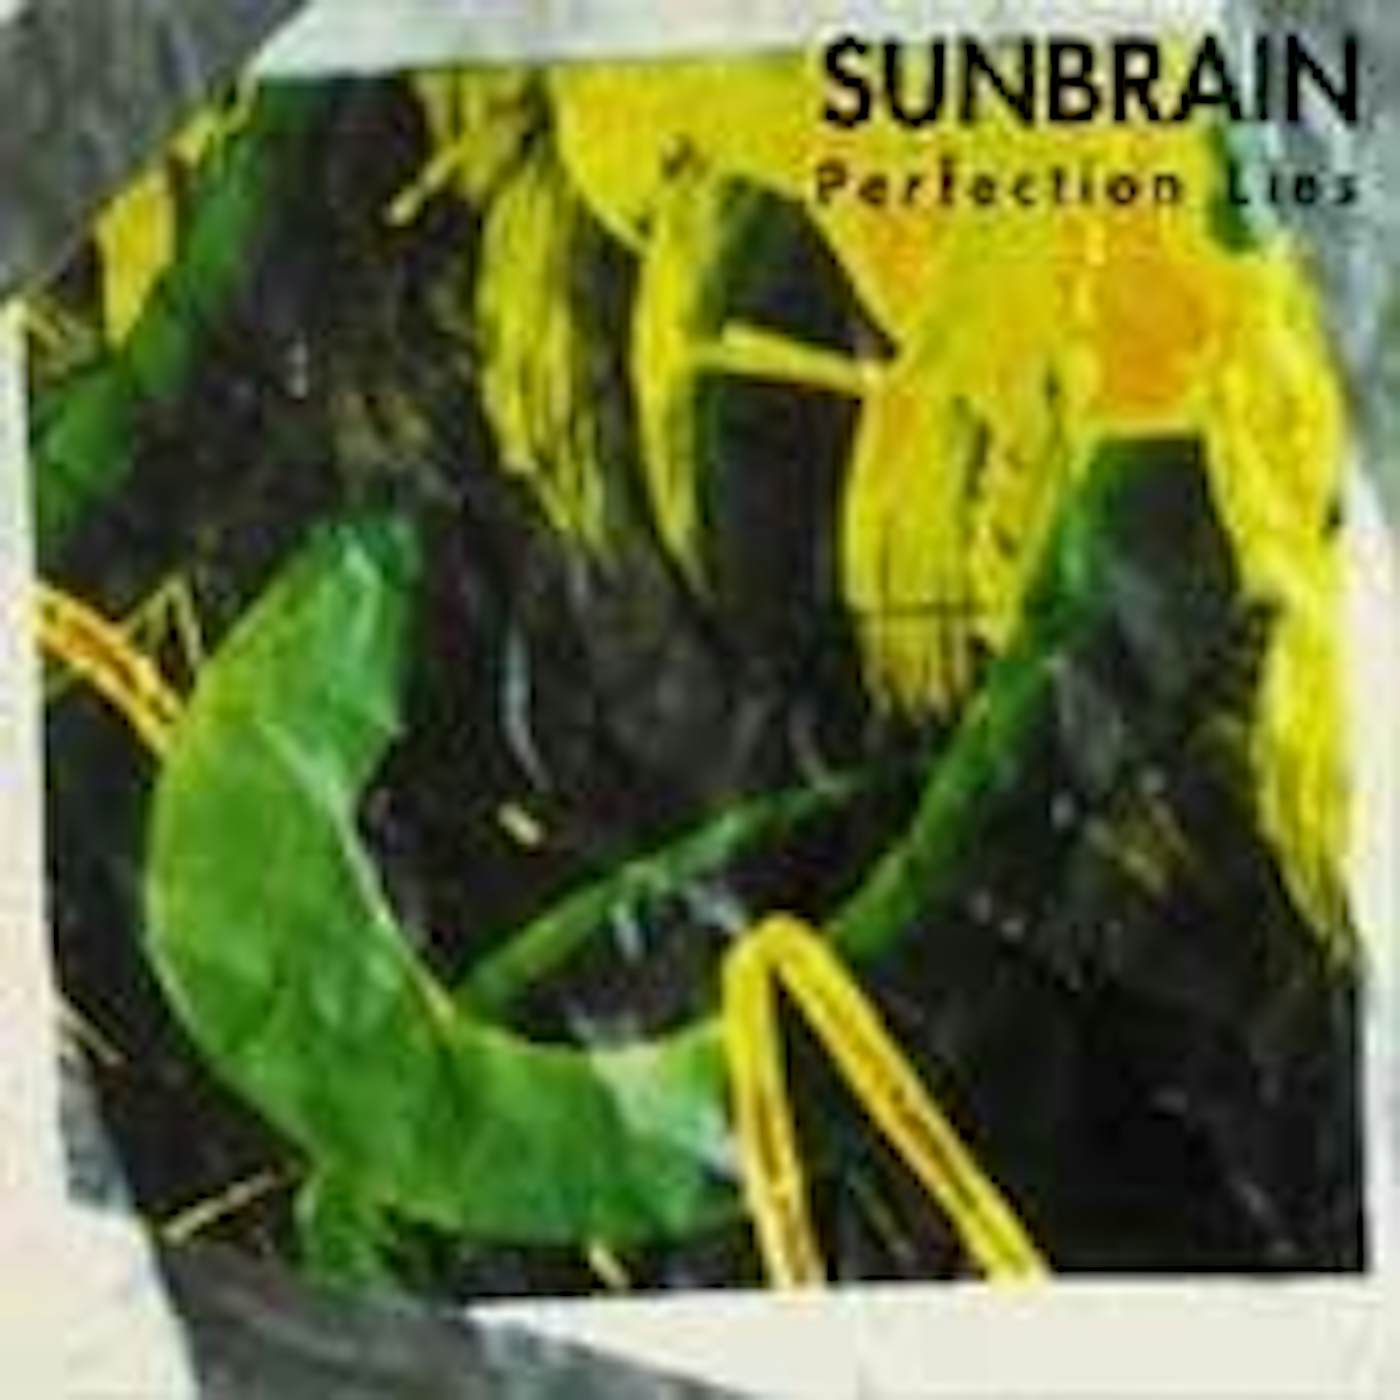 Sunbrain PERFECTION LIES CD